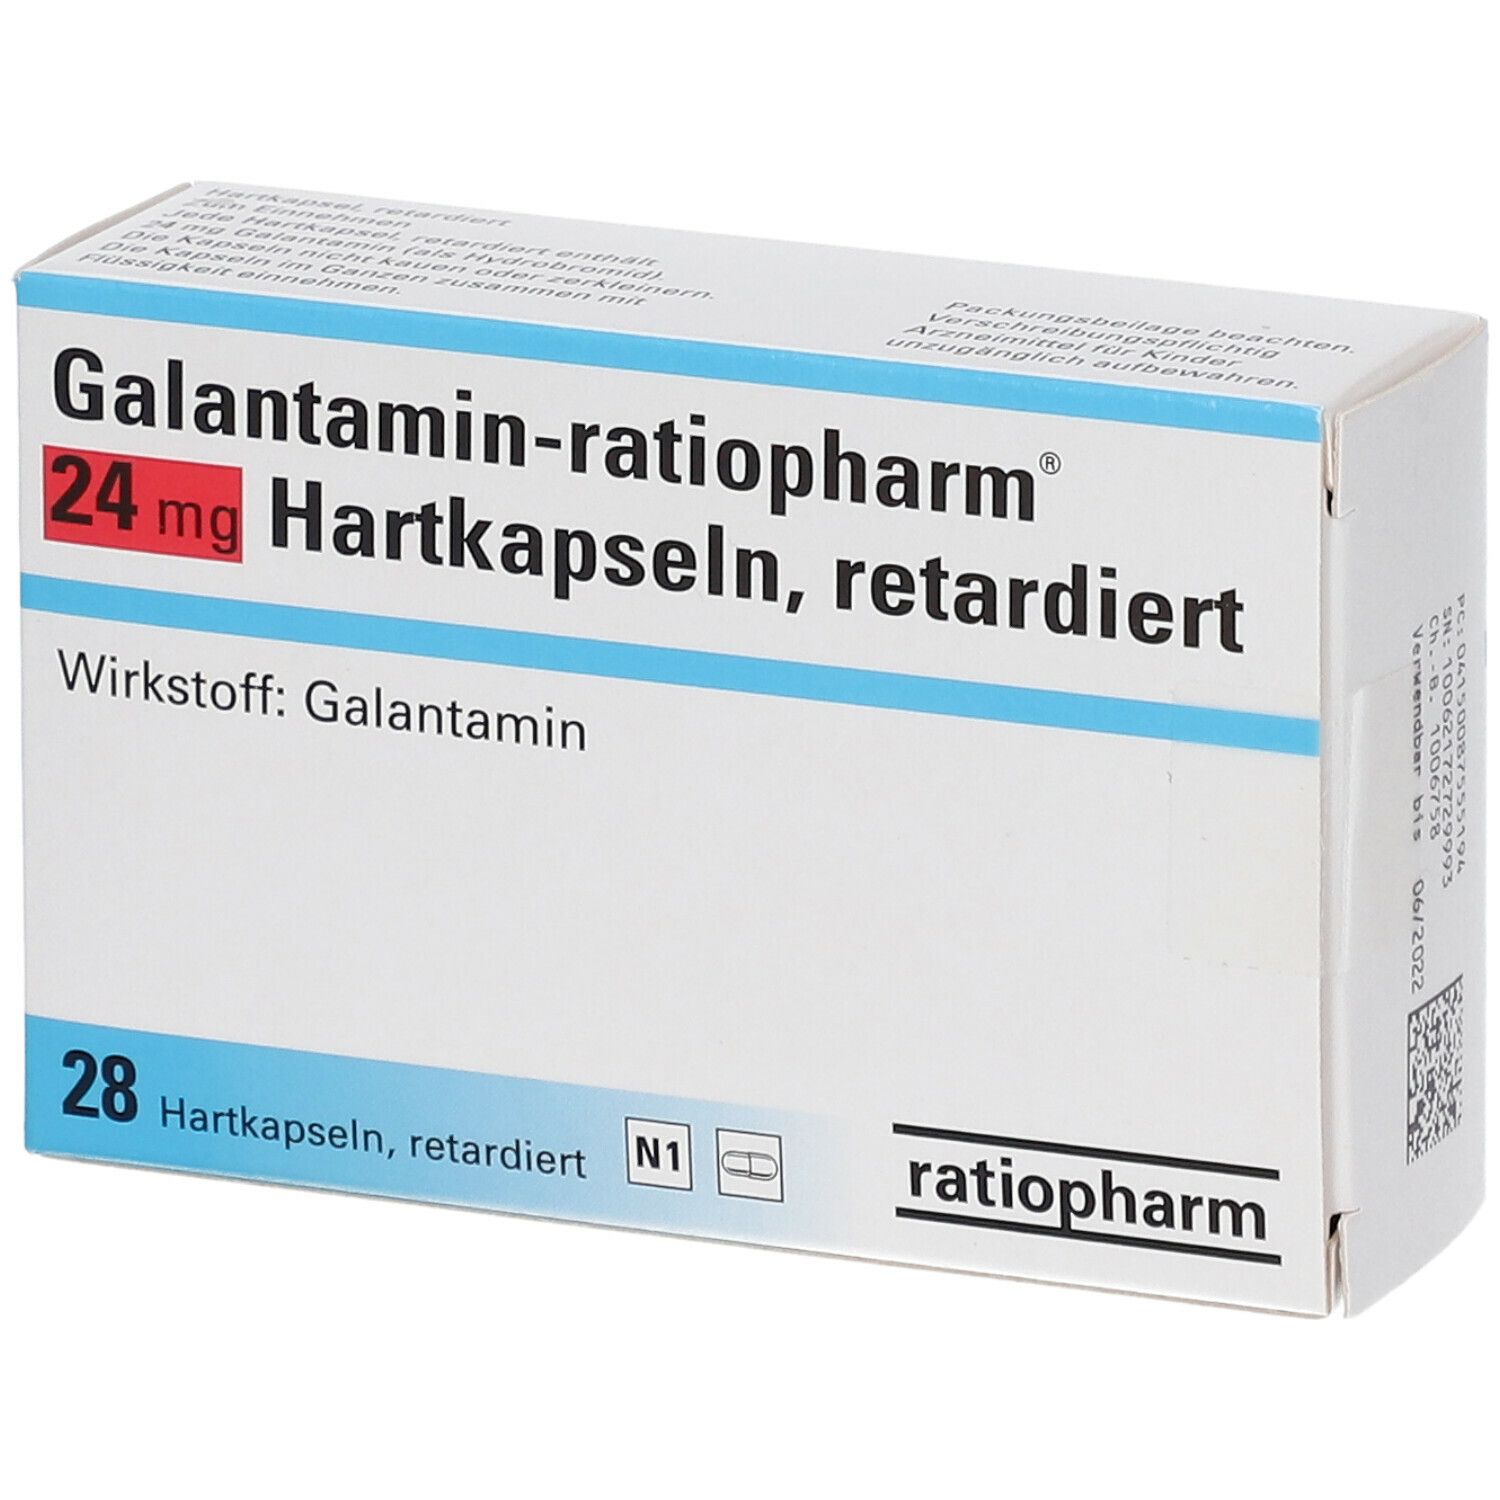 Galantamin-ratiopharm® 24 mg